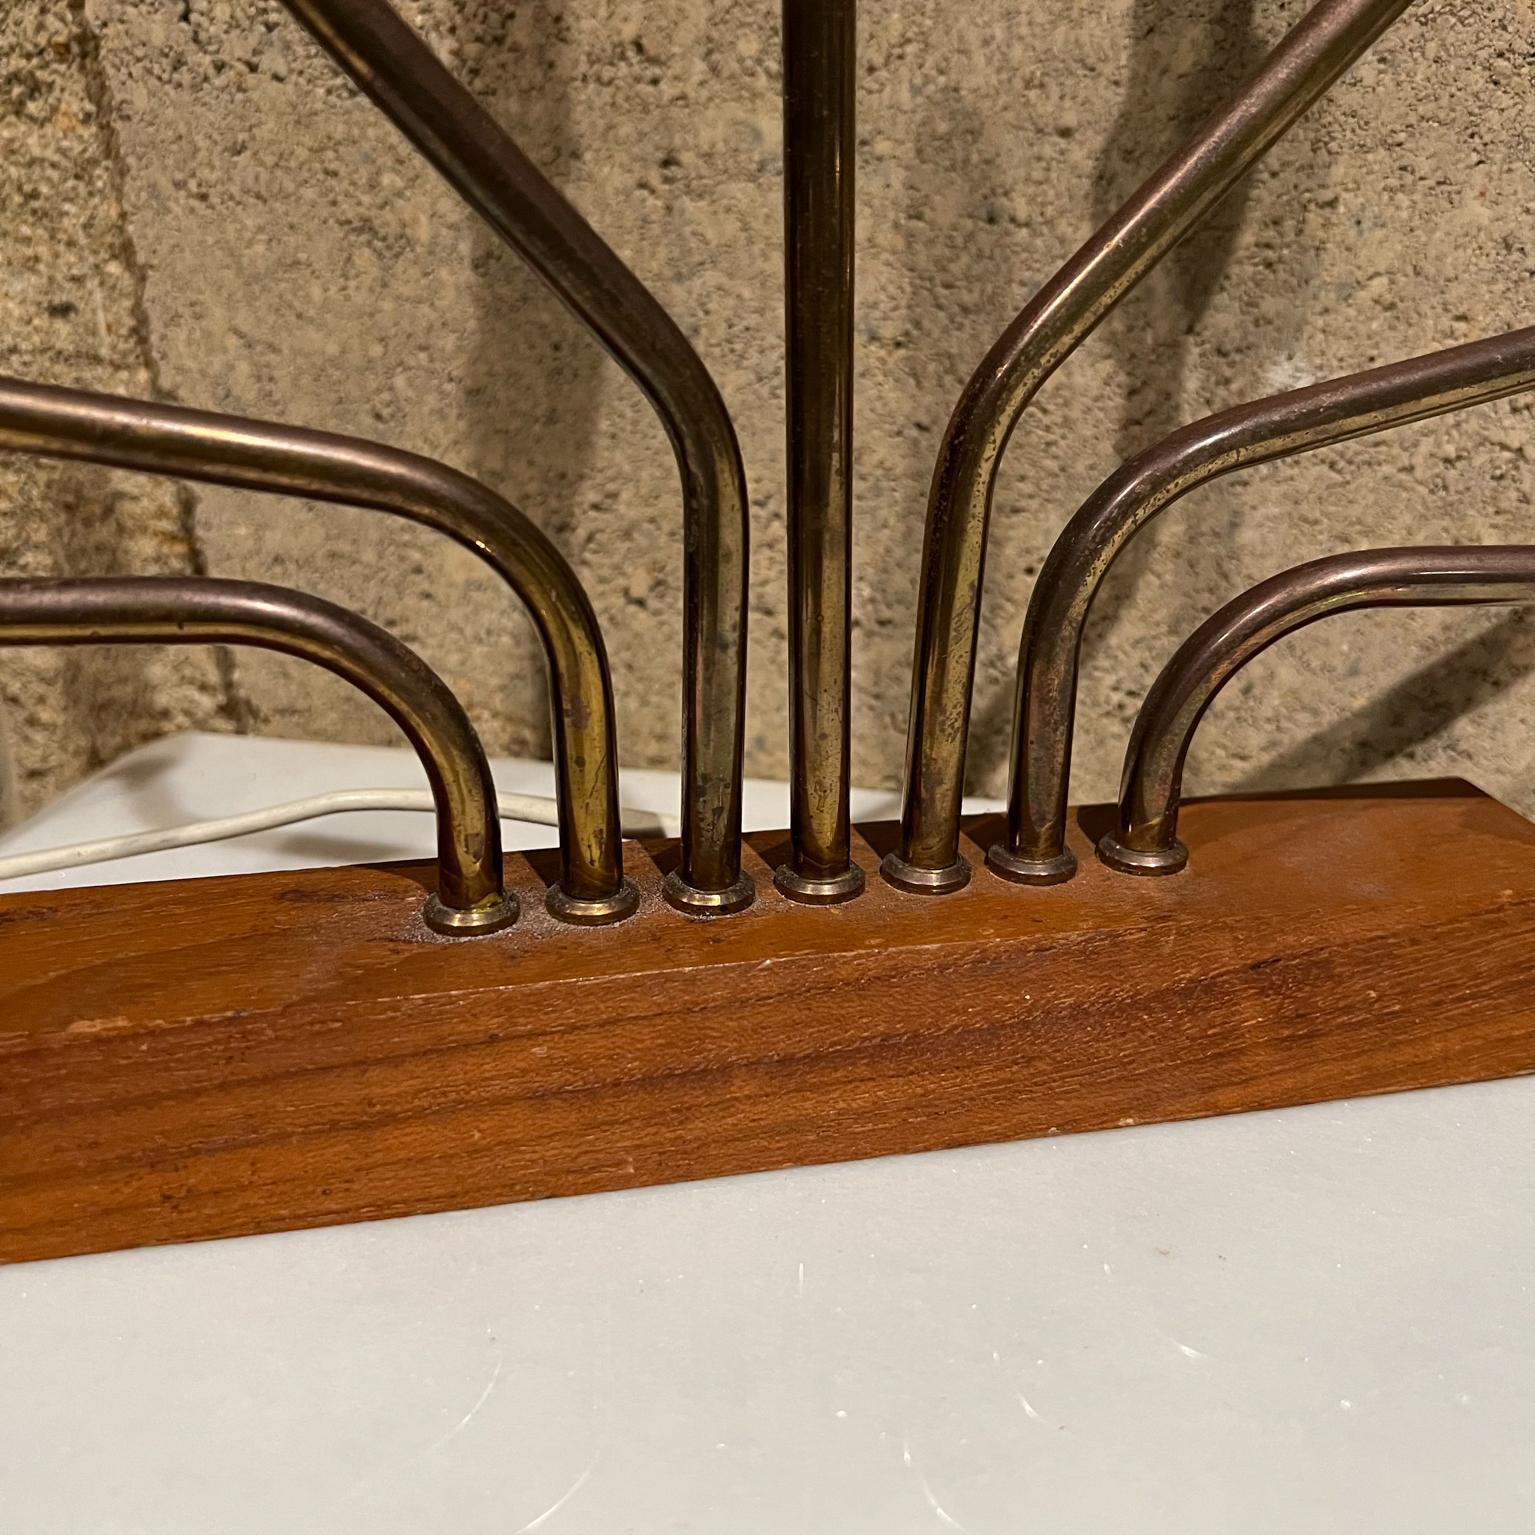 1960s European Modernism Menorah Sculptural Table Lamp Pair in Teak & Brass For Sale 6